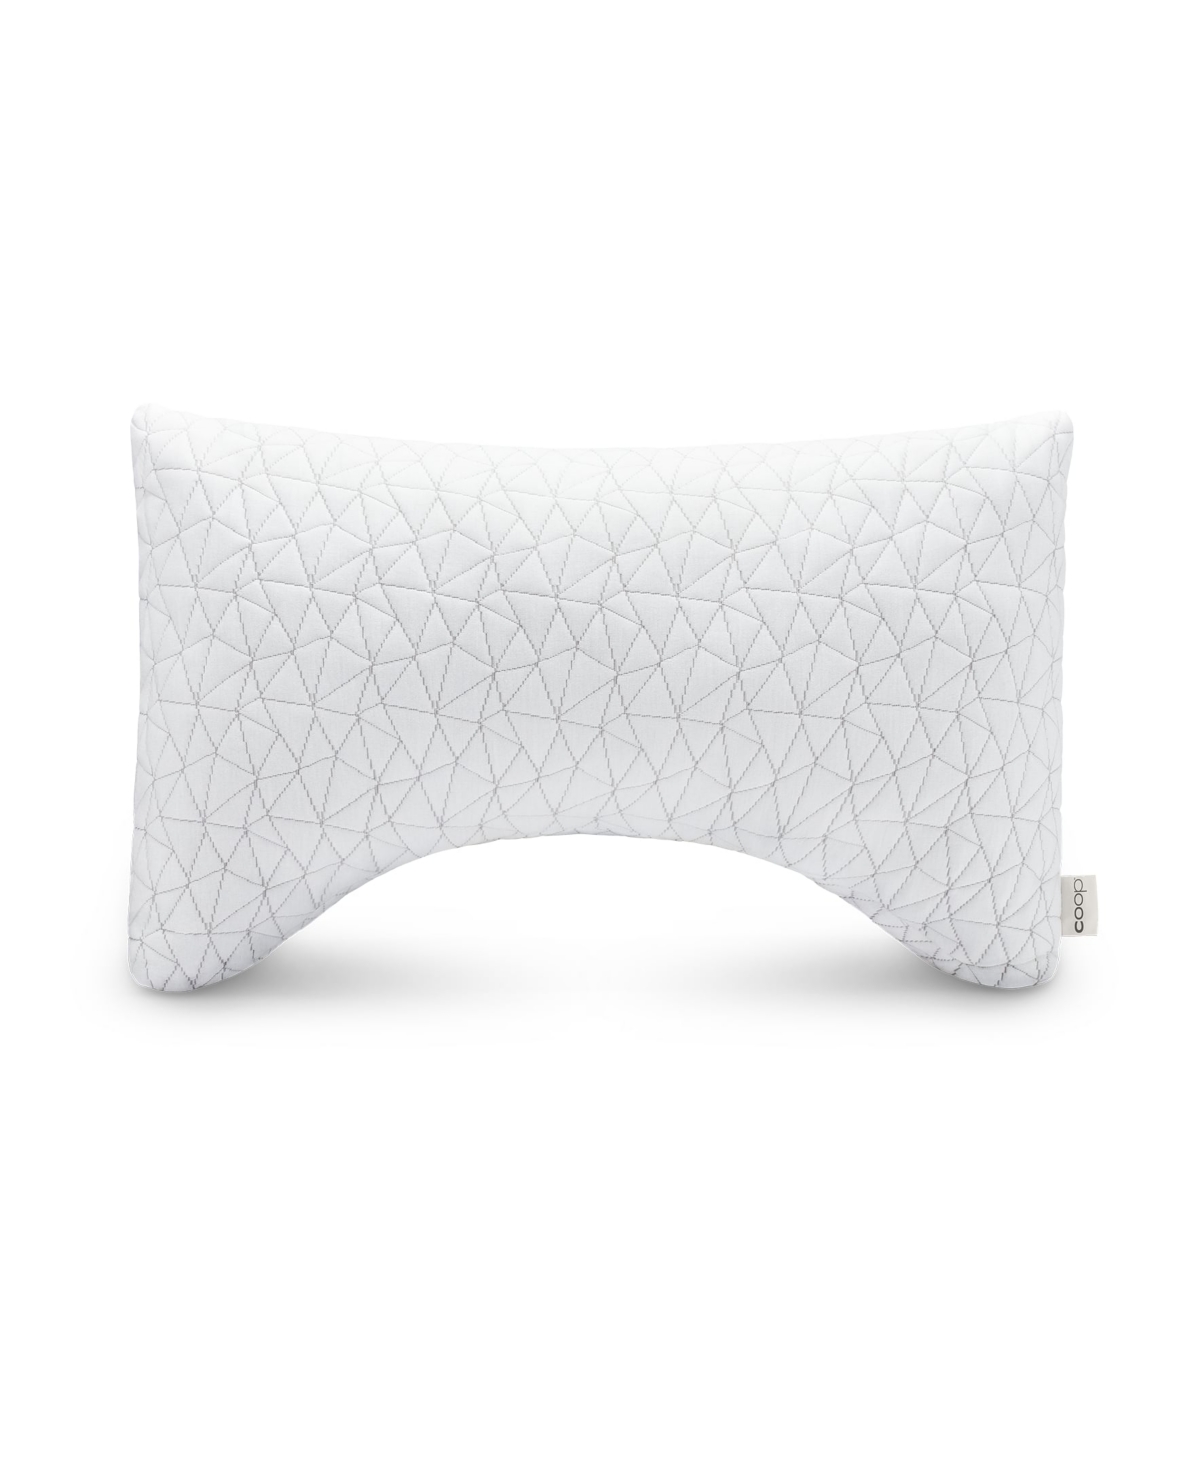 Shop Coop Sleep Goods The Original Crescent Adjustable Memory Foam Pillow, King In White